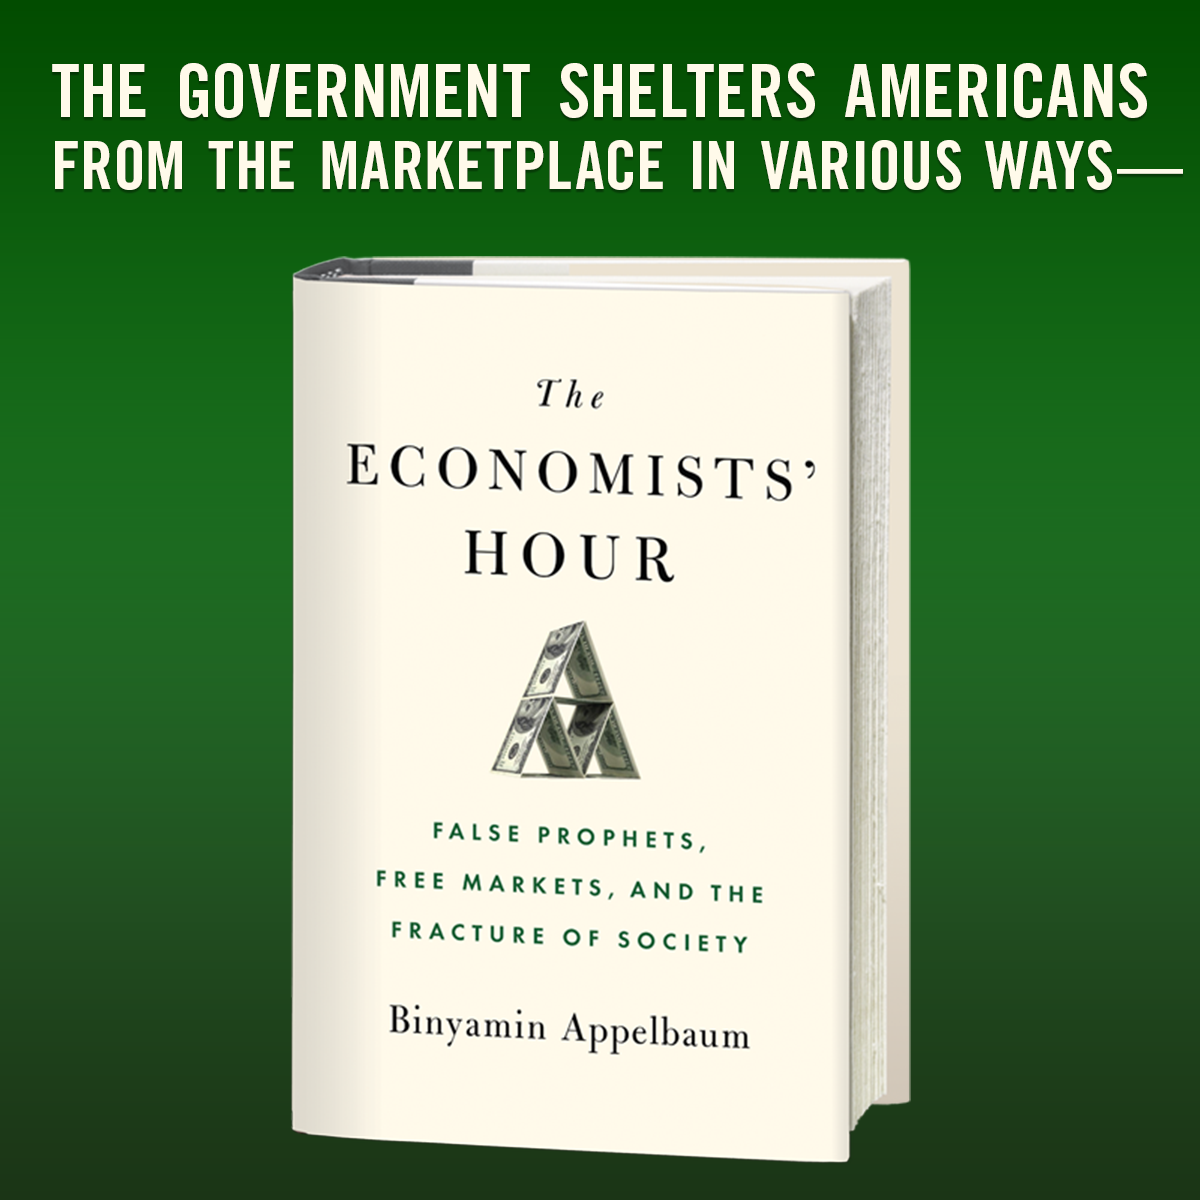 The Economists' Hour quotegraphic 6